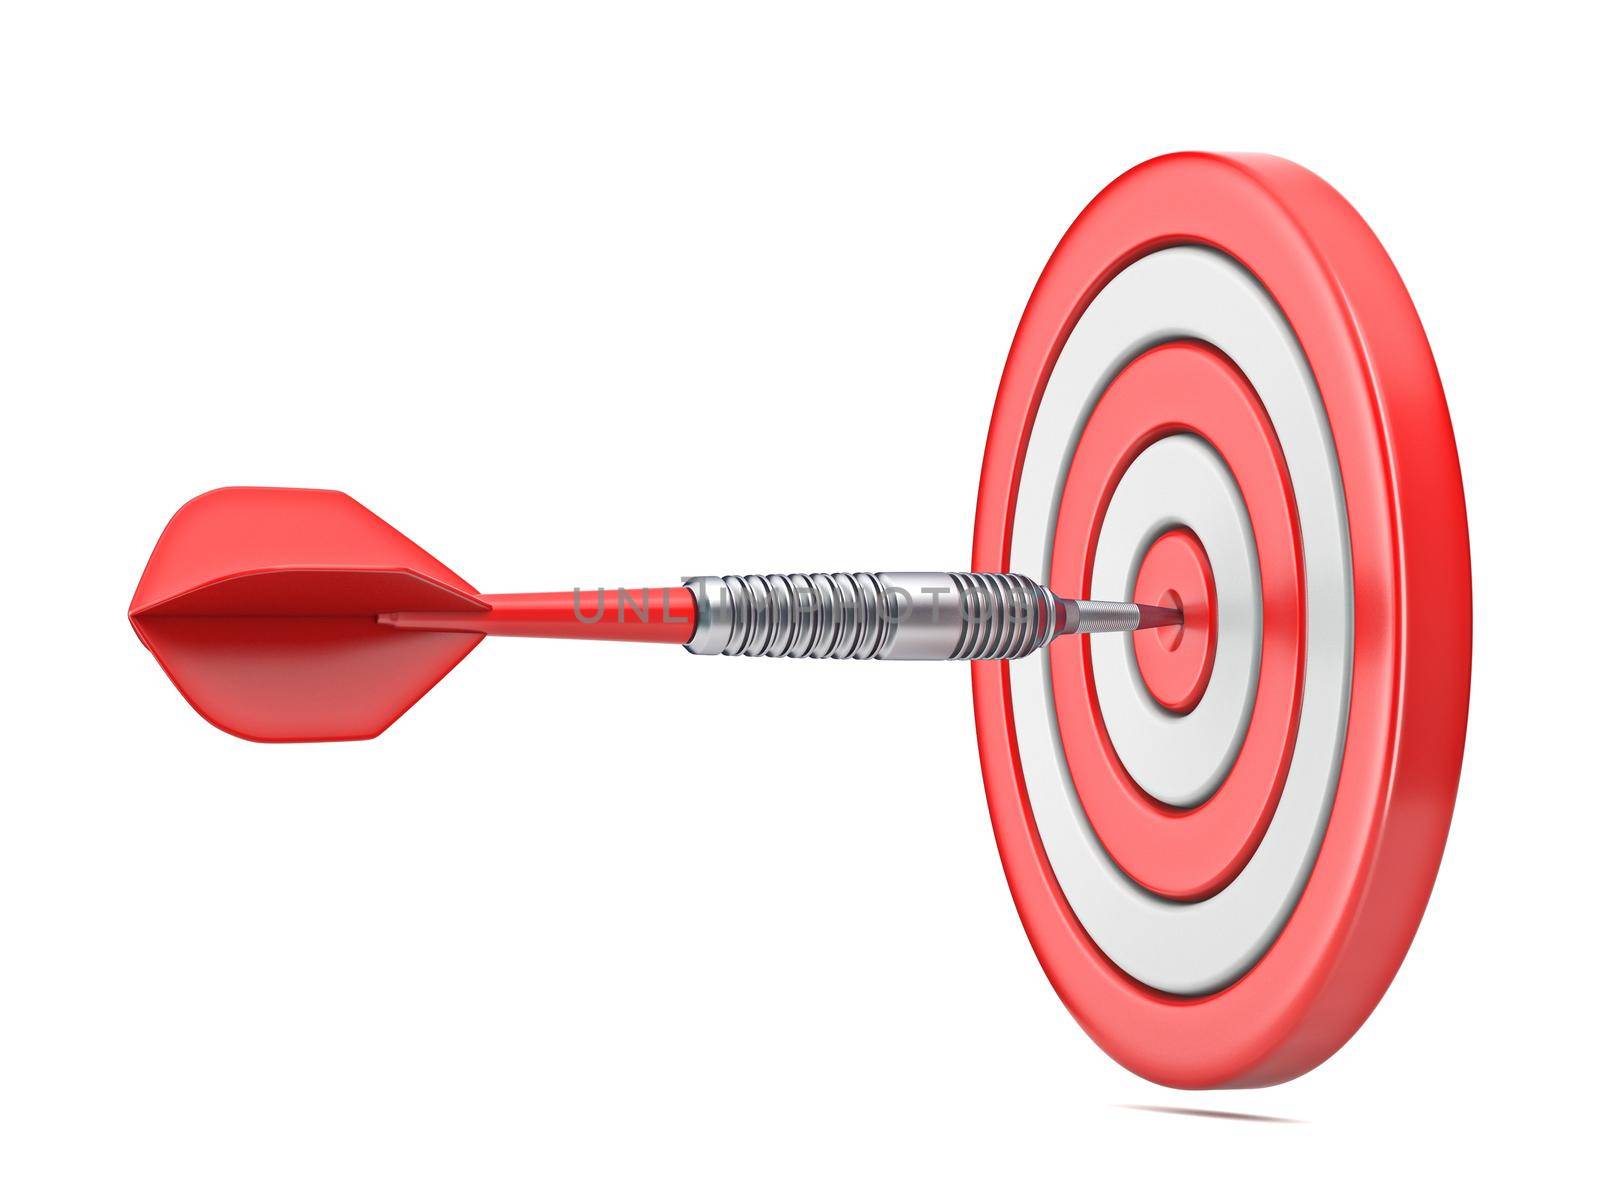 Dart hitting red target 3D rendering illustration isolated on white background